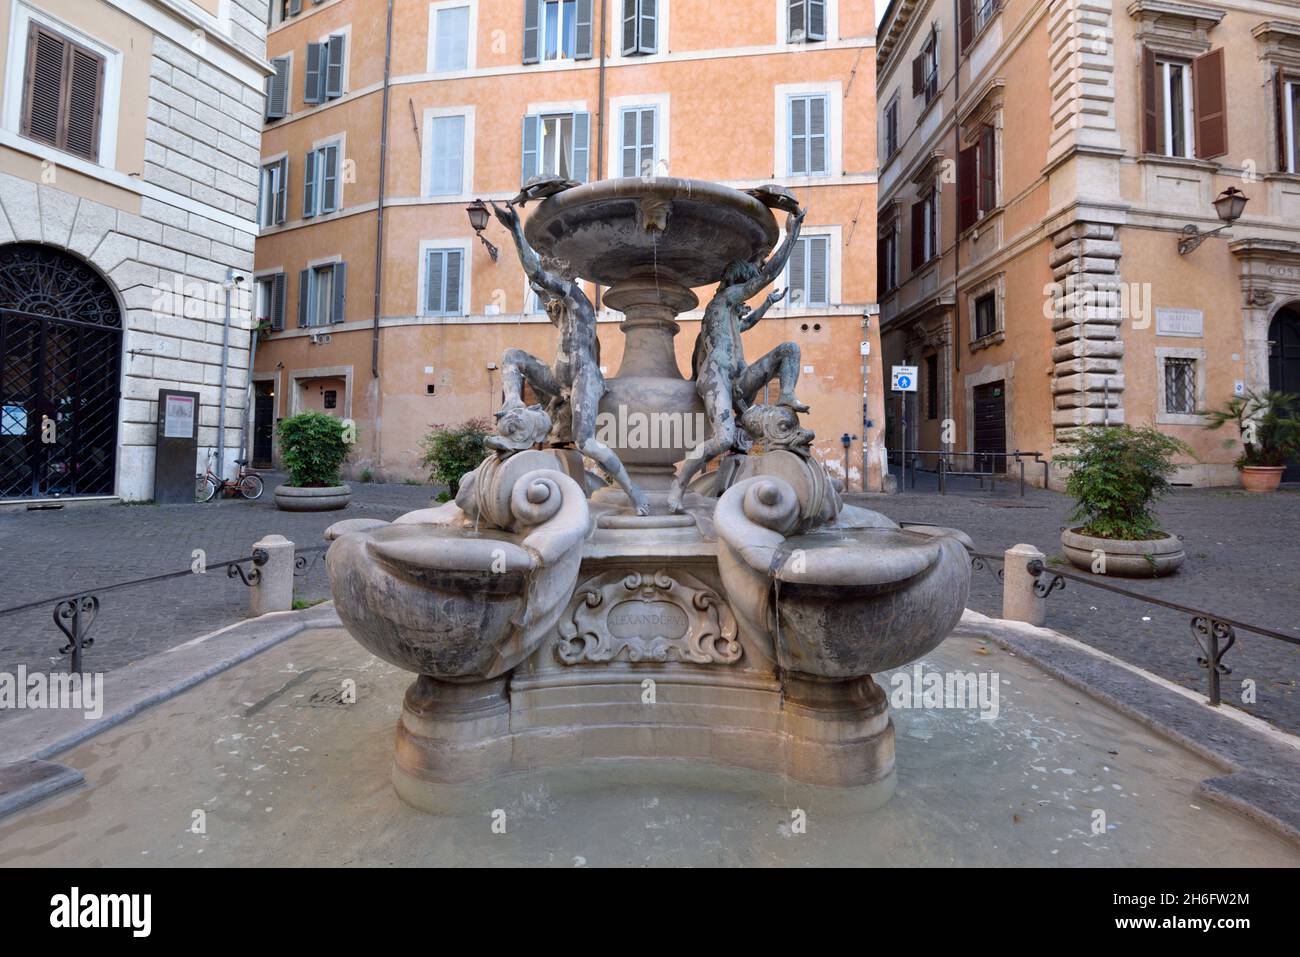 L'Italie, Rome, ghetto juif, piazza mattei, Fontana delle tartarughe Banque D'Images